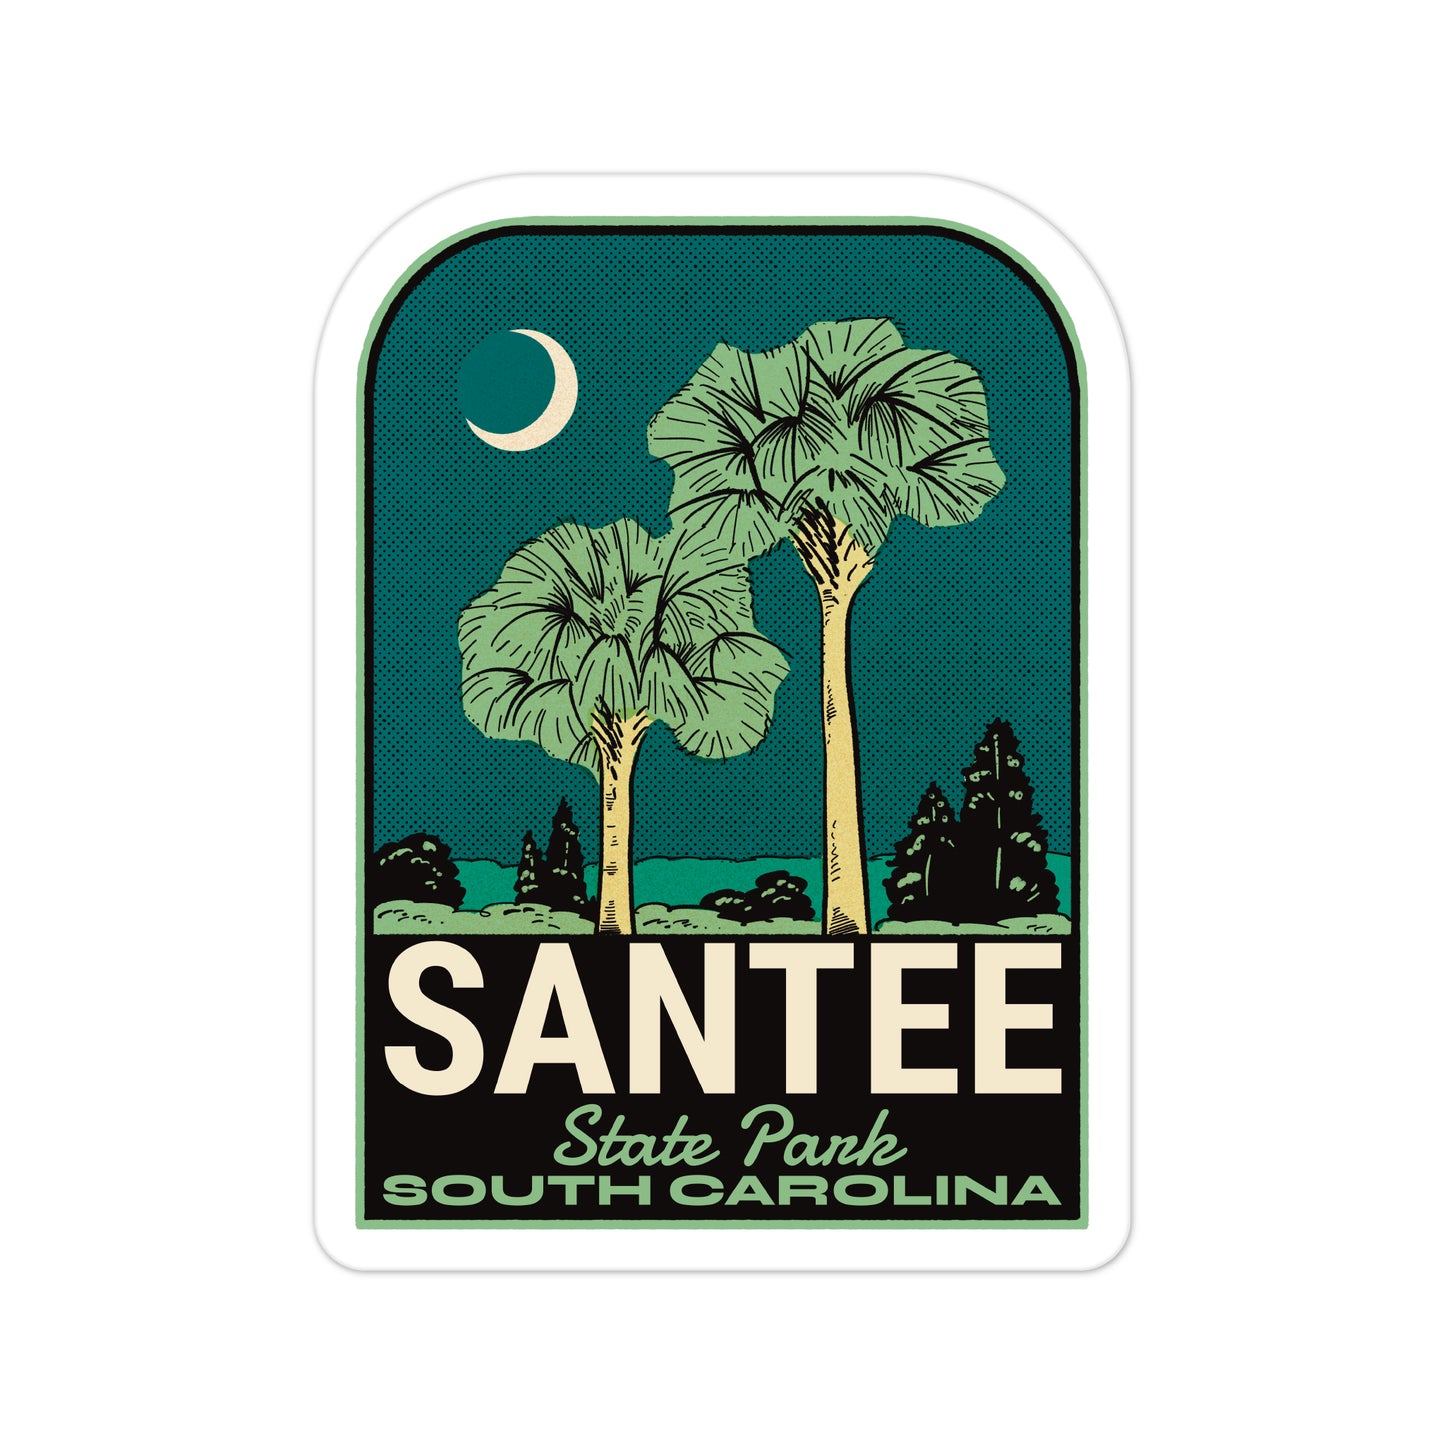 A sticker of Santee State Park